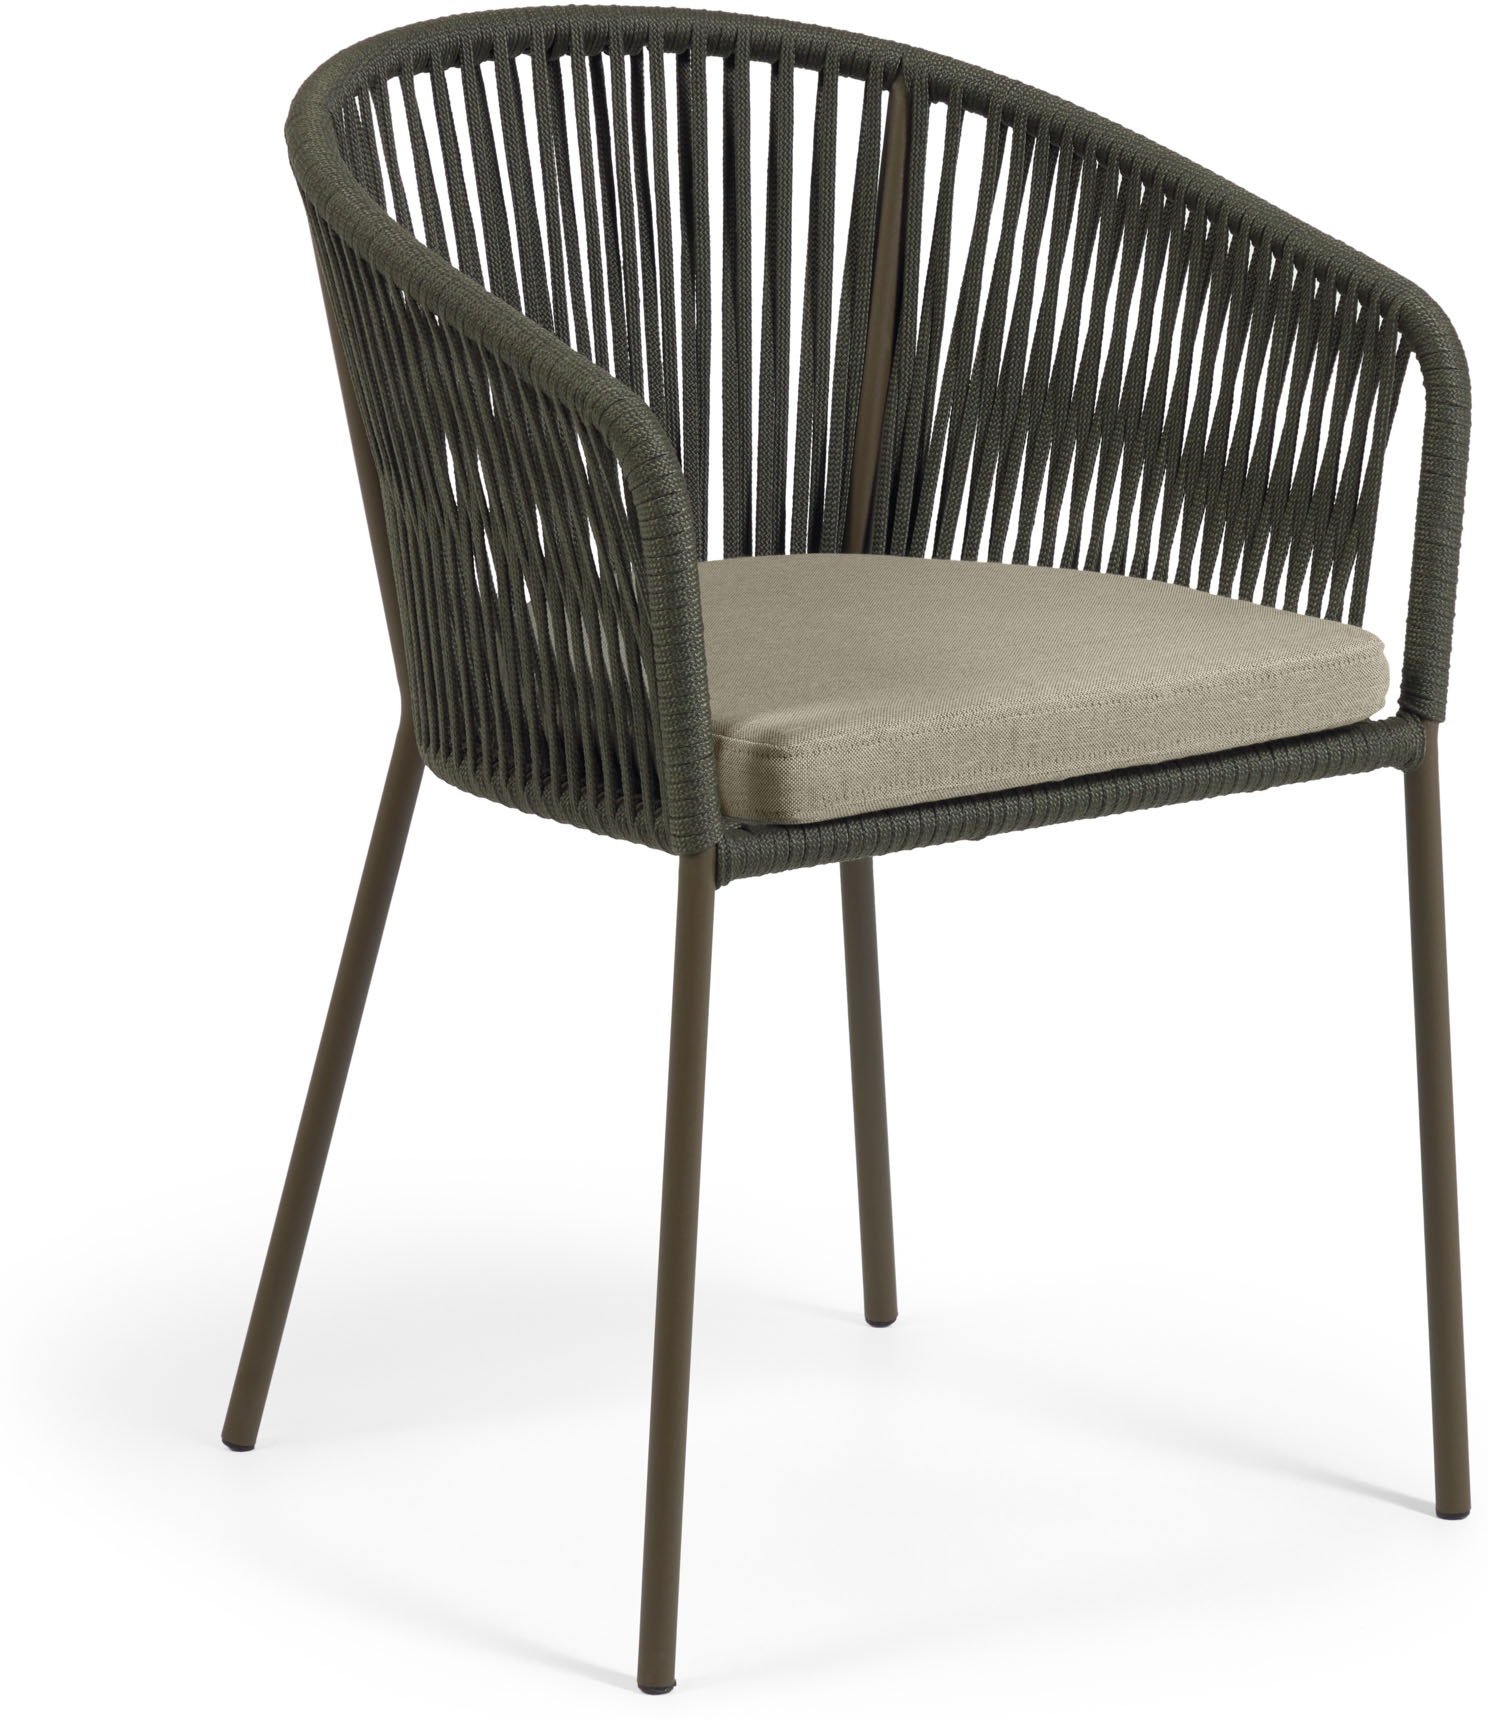 #3 - Yanet, Udendørs spisebordsstol by LaForma (H: 79 cm. x B: 56 cm. x L: 50 cm., Grøn)